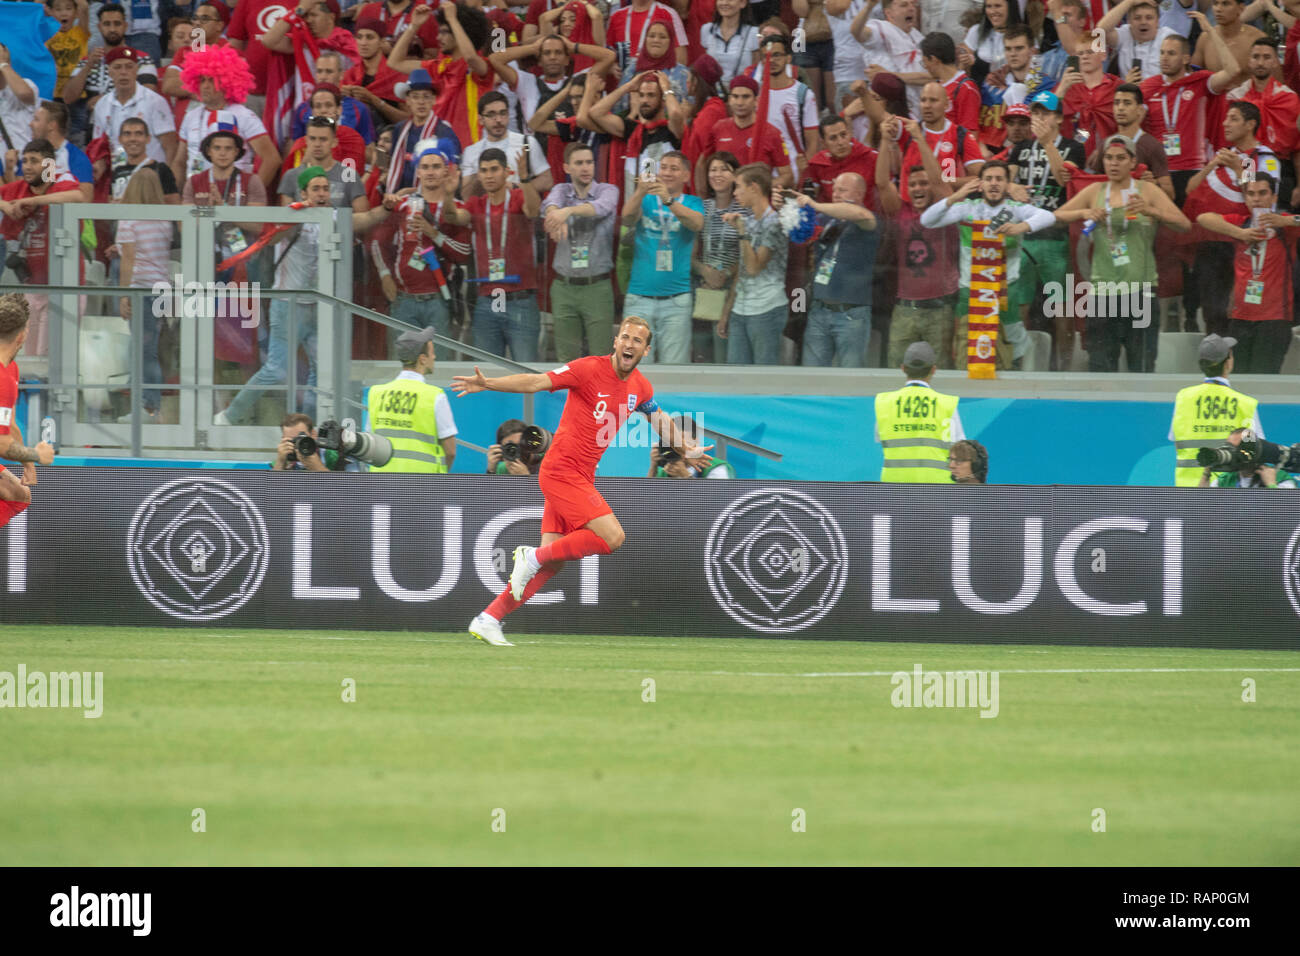 HARRY KANE hoy celebra su primer gol en la Copa del Mundo de 2018 contra Túnez. Imagen JEREMY SELWYN 18/06/2018 Foto de stock